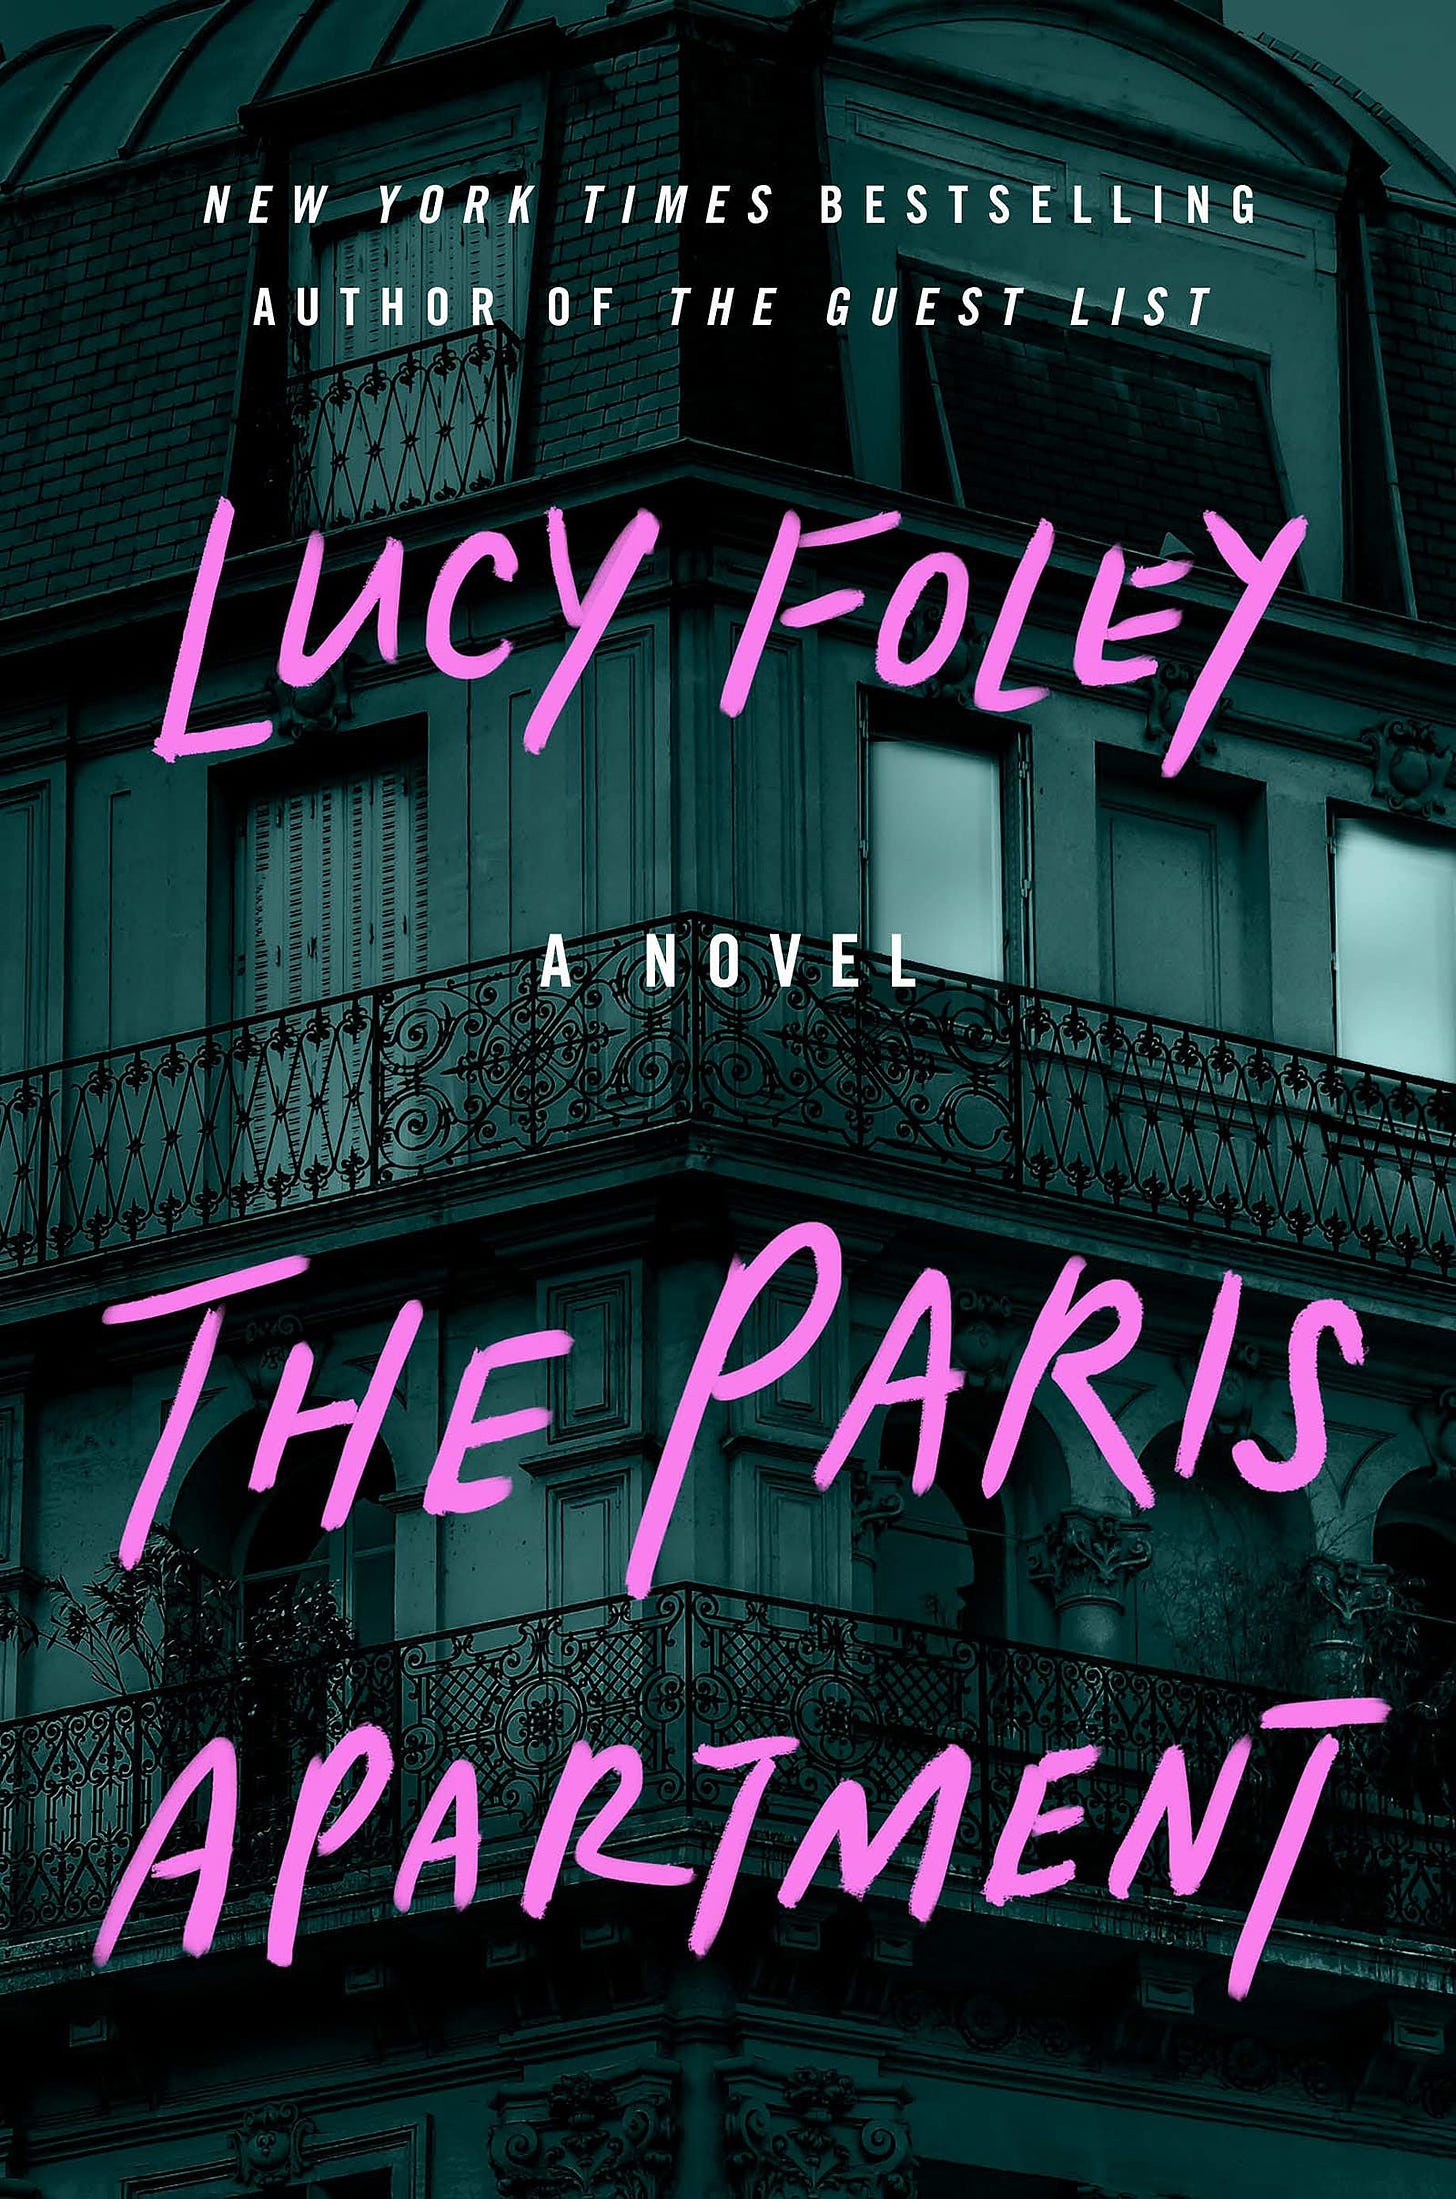 Amazon.com: The Paris Apartment: A Novel: 9780063003057: Foley, Lucy: Books